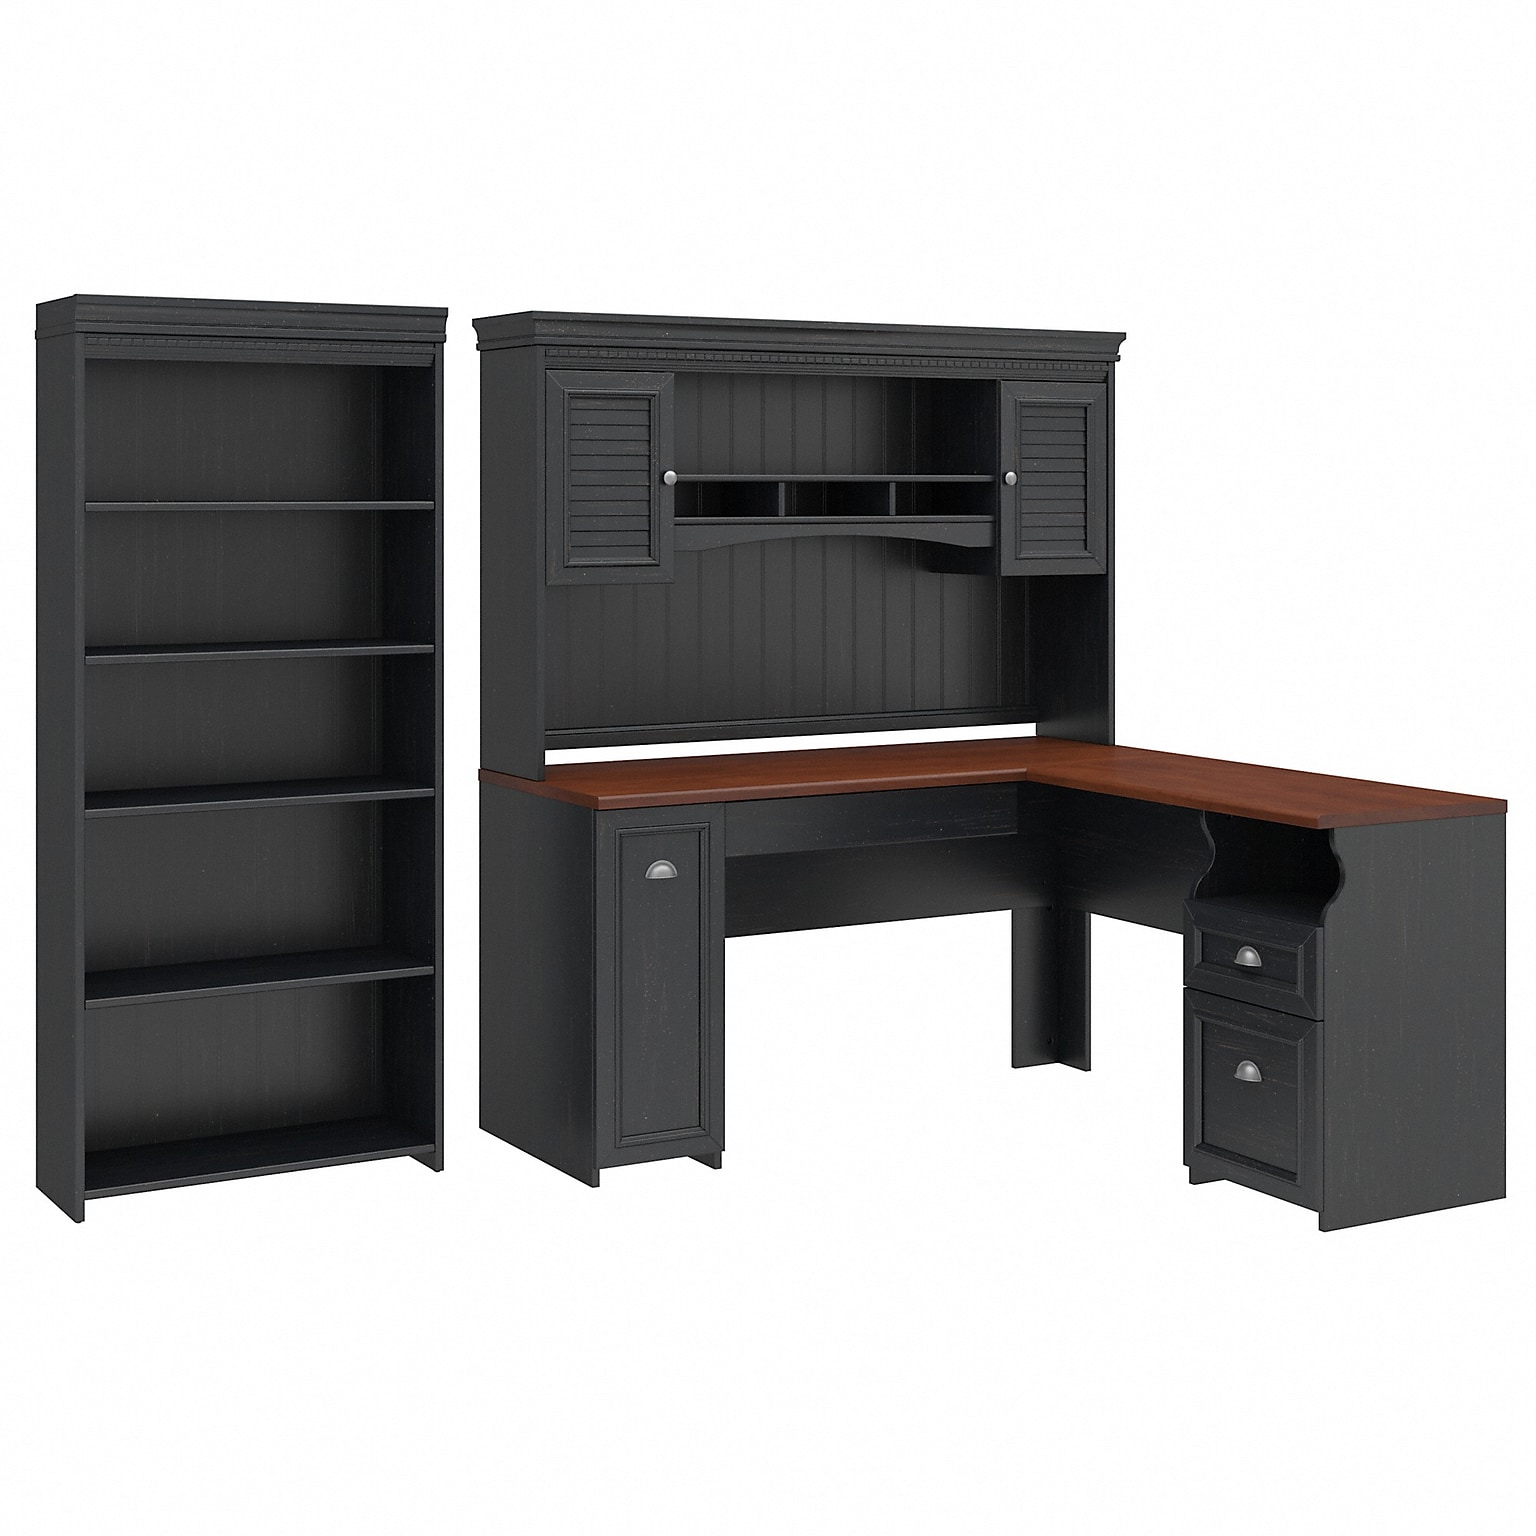 Bush Furniture Fairview 60 W L Shaped Desk with Hutch and 5 Shelf Bookcase Bundle, Antique Black (FV005AB)